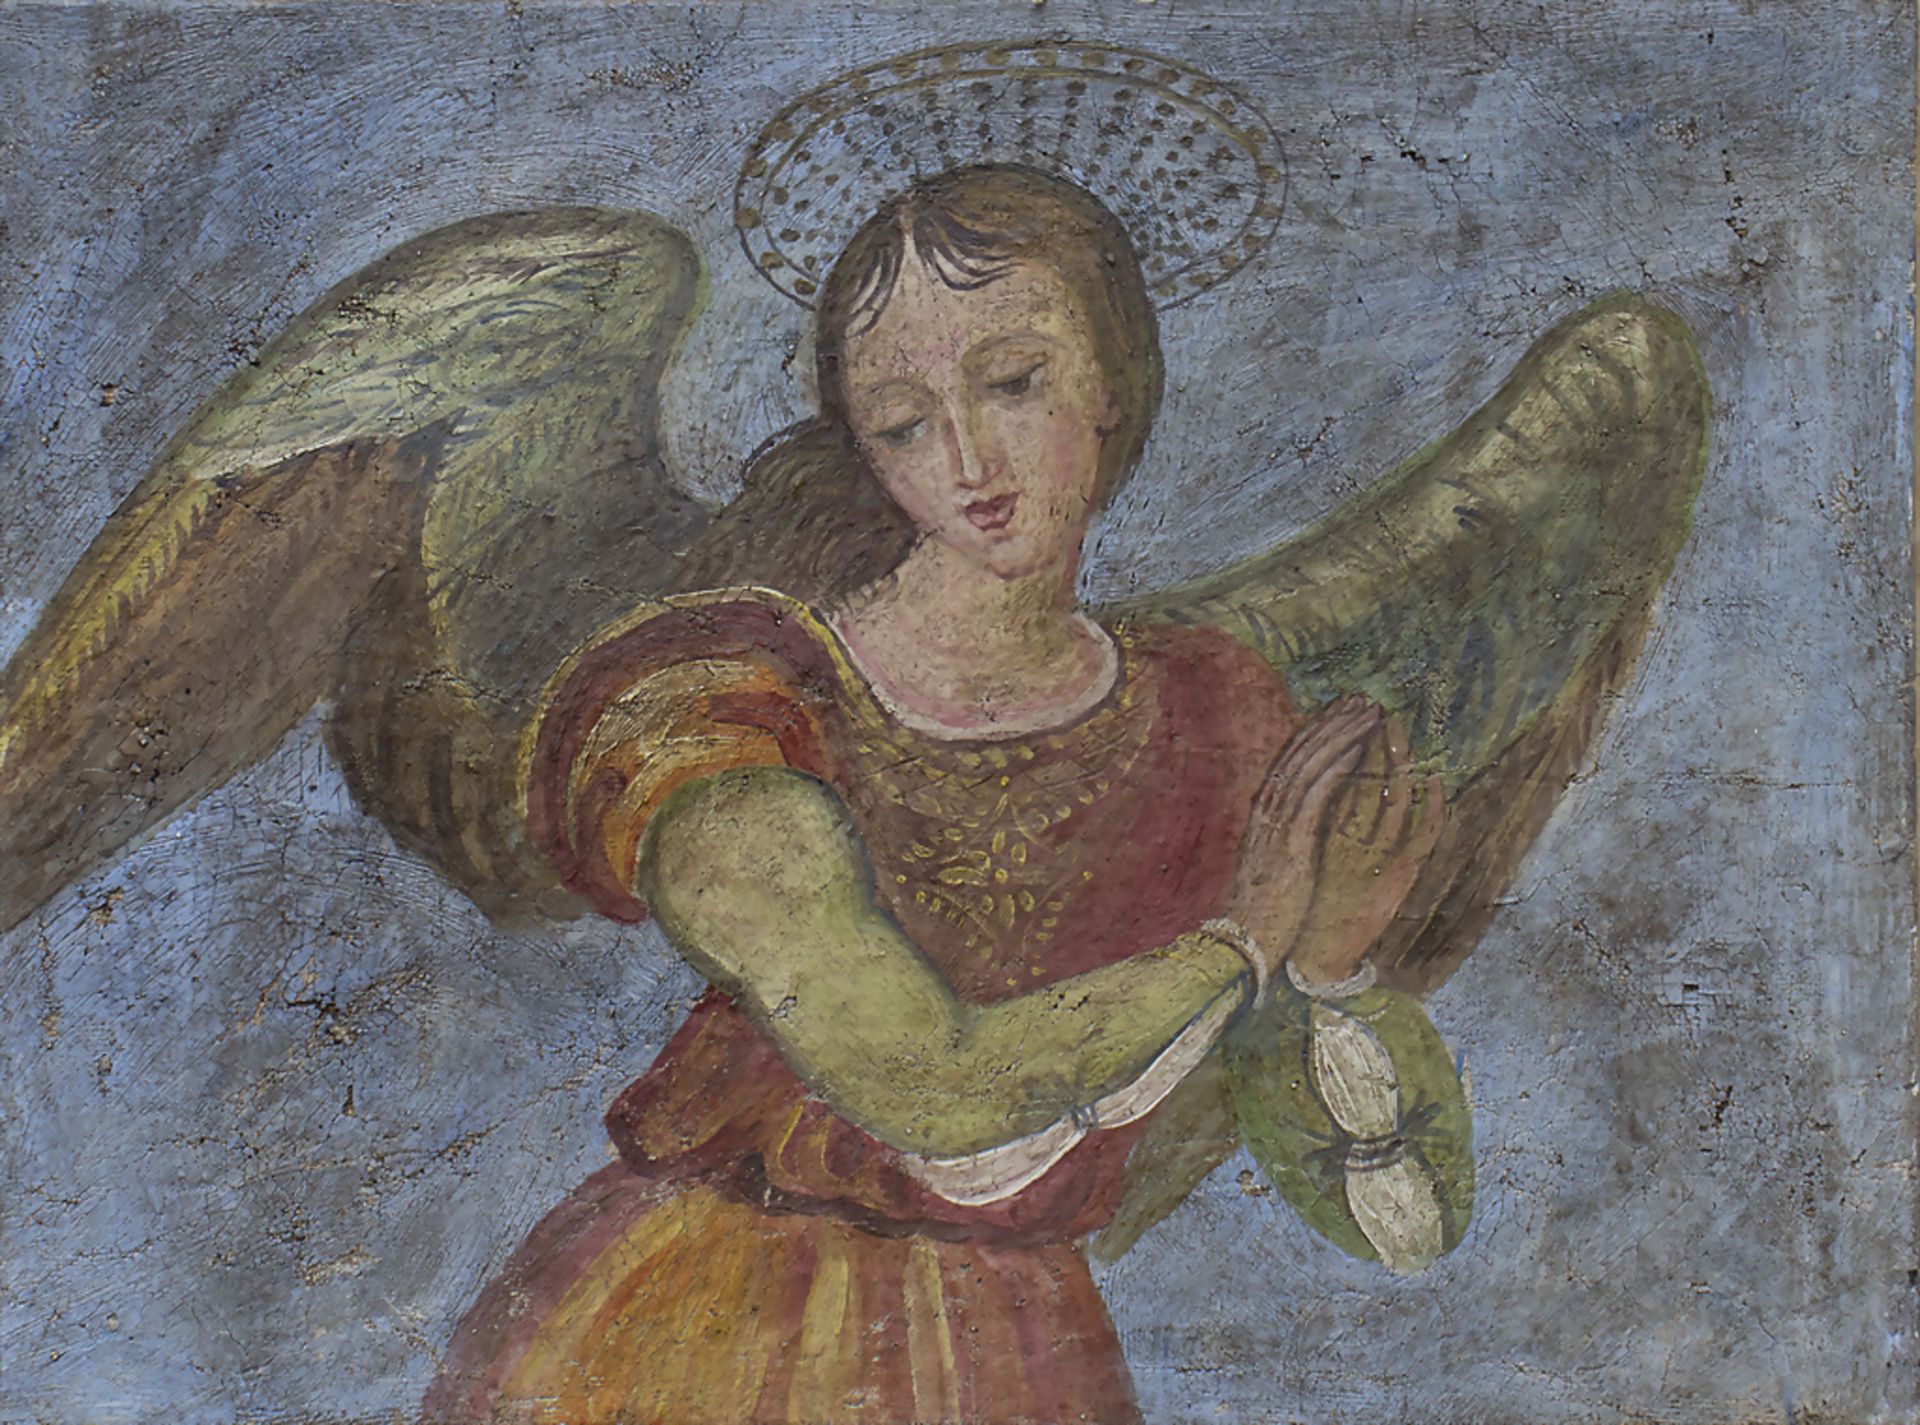 Unbekannter Künstler des 18./19. Jh., 'Porträt eines Engels' / A portrait of an angel'